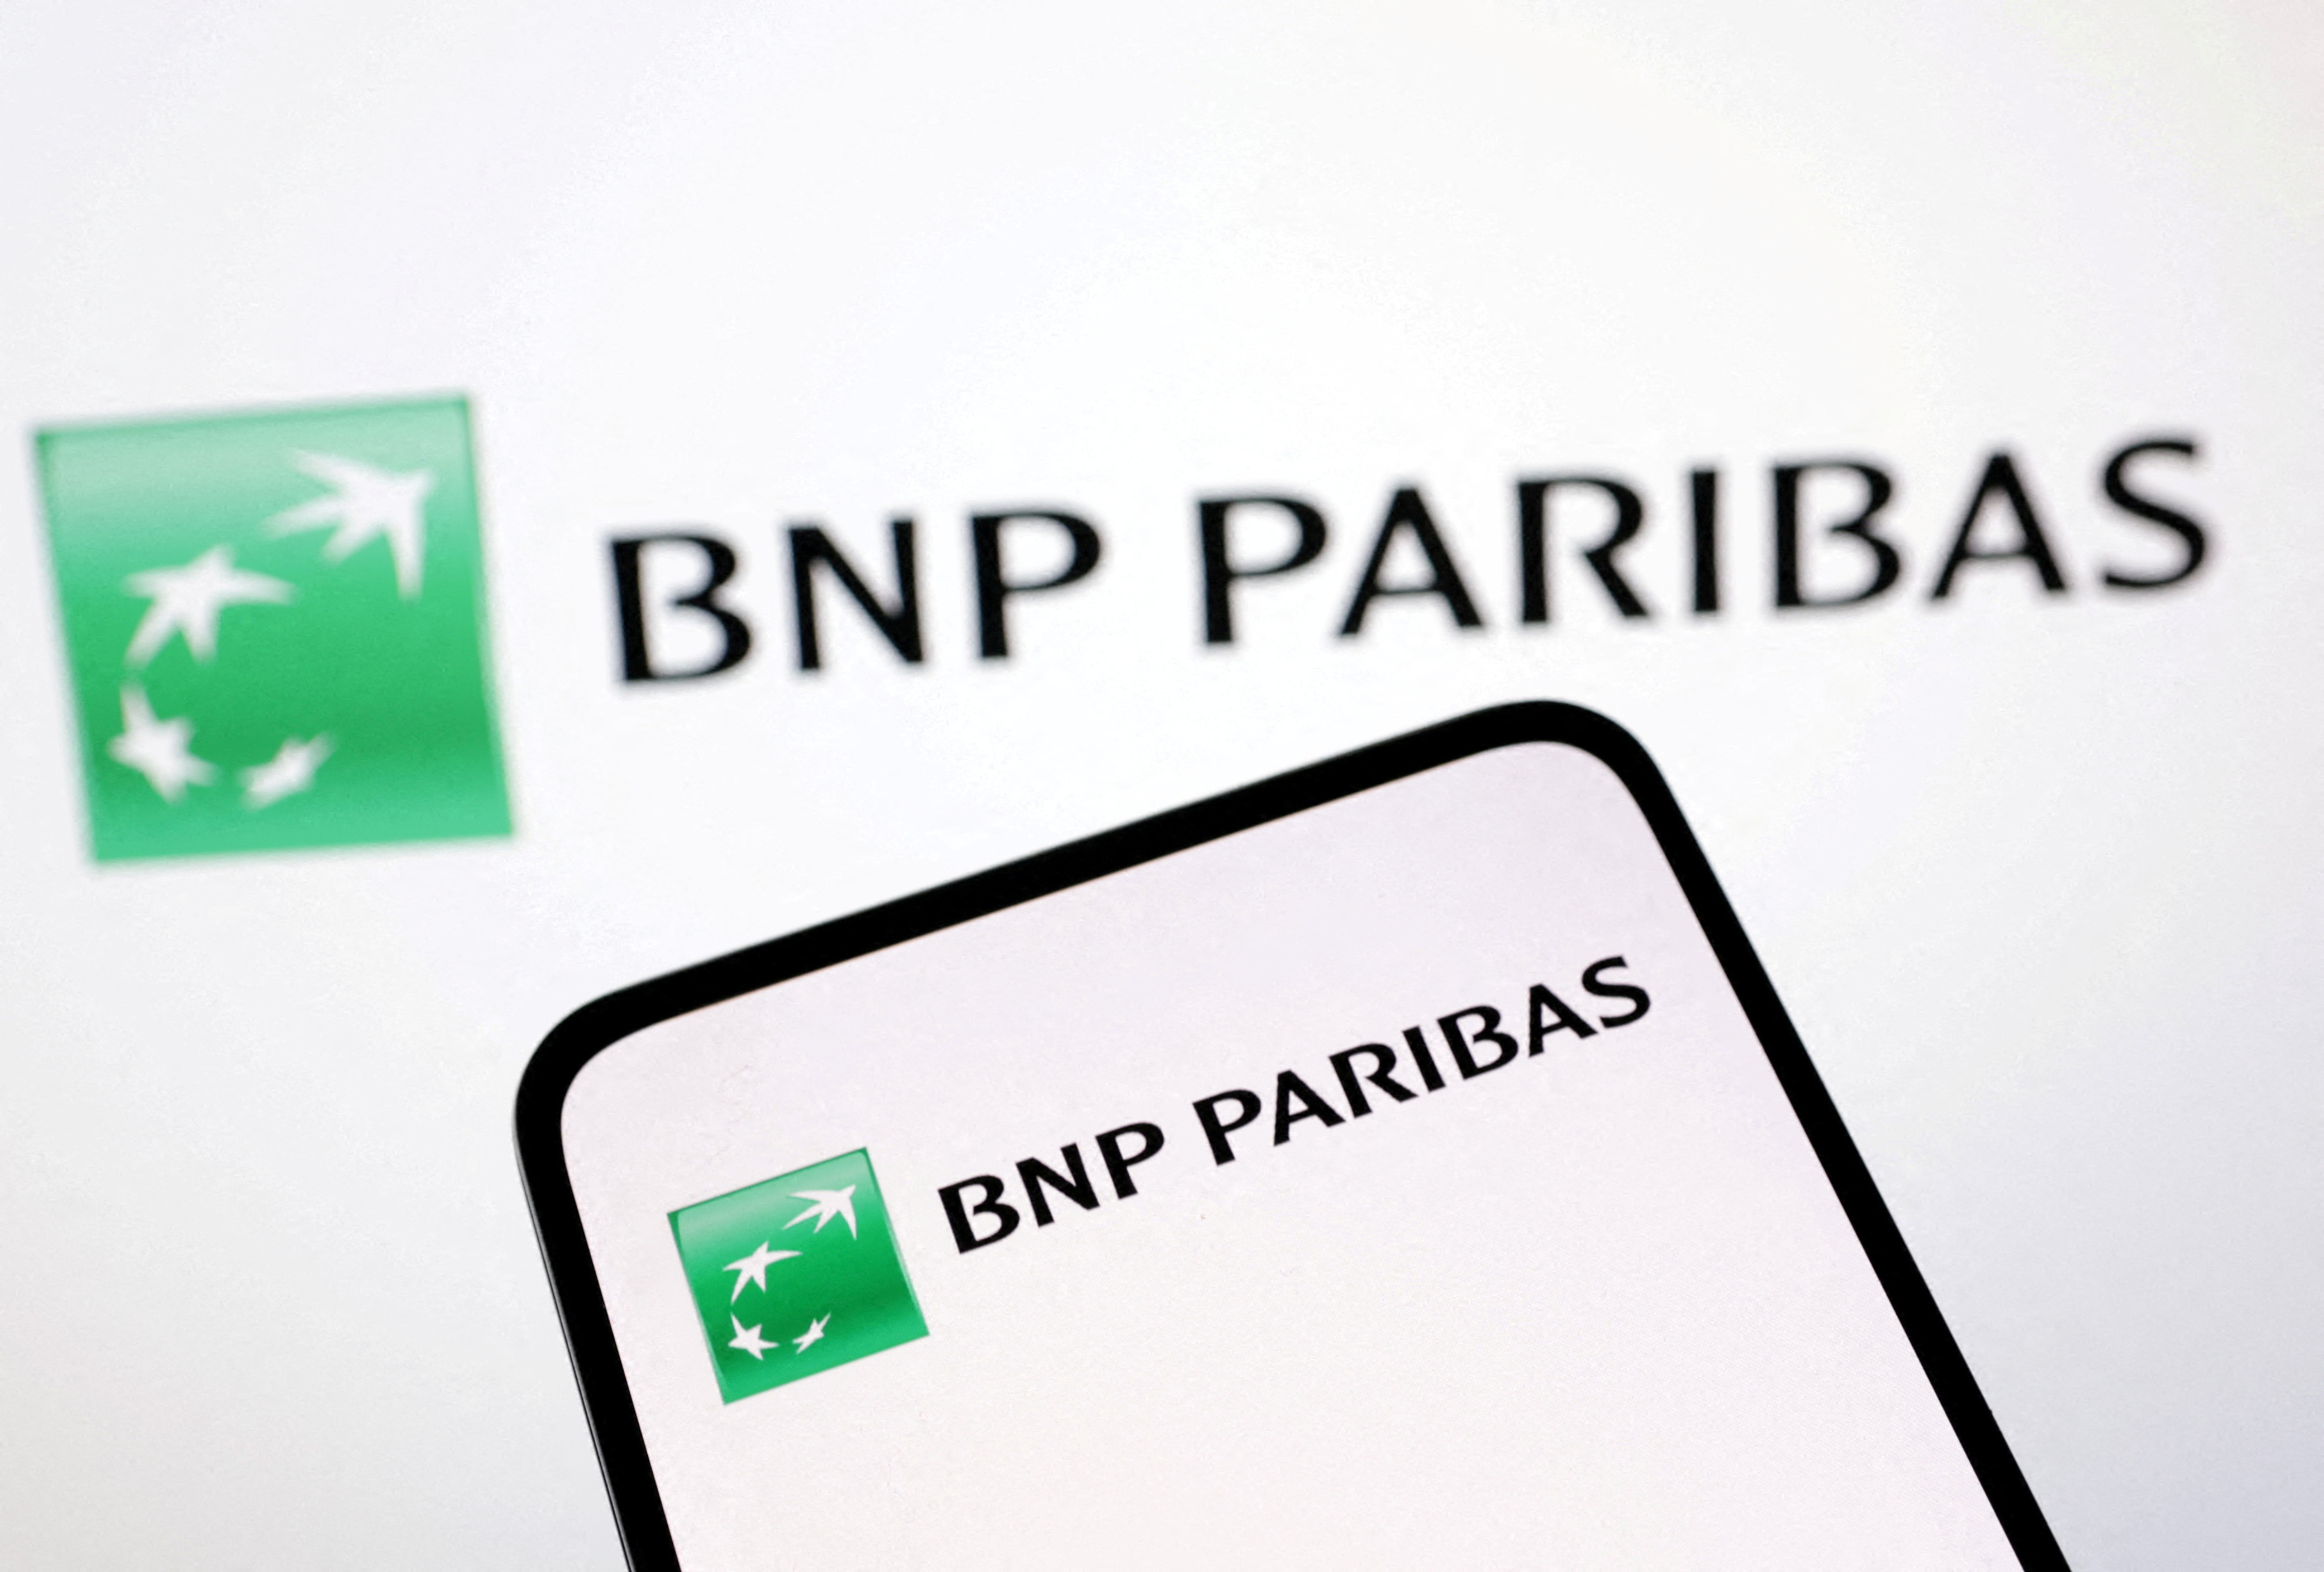 Illustration shows BNP Paribas Bank logo